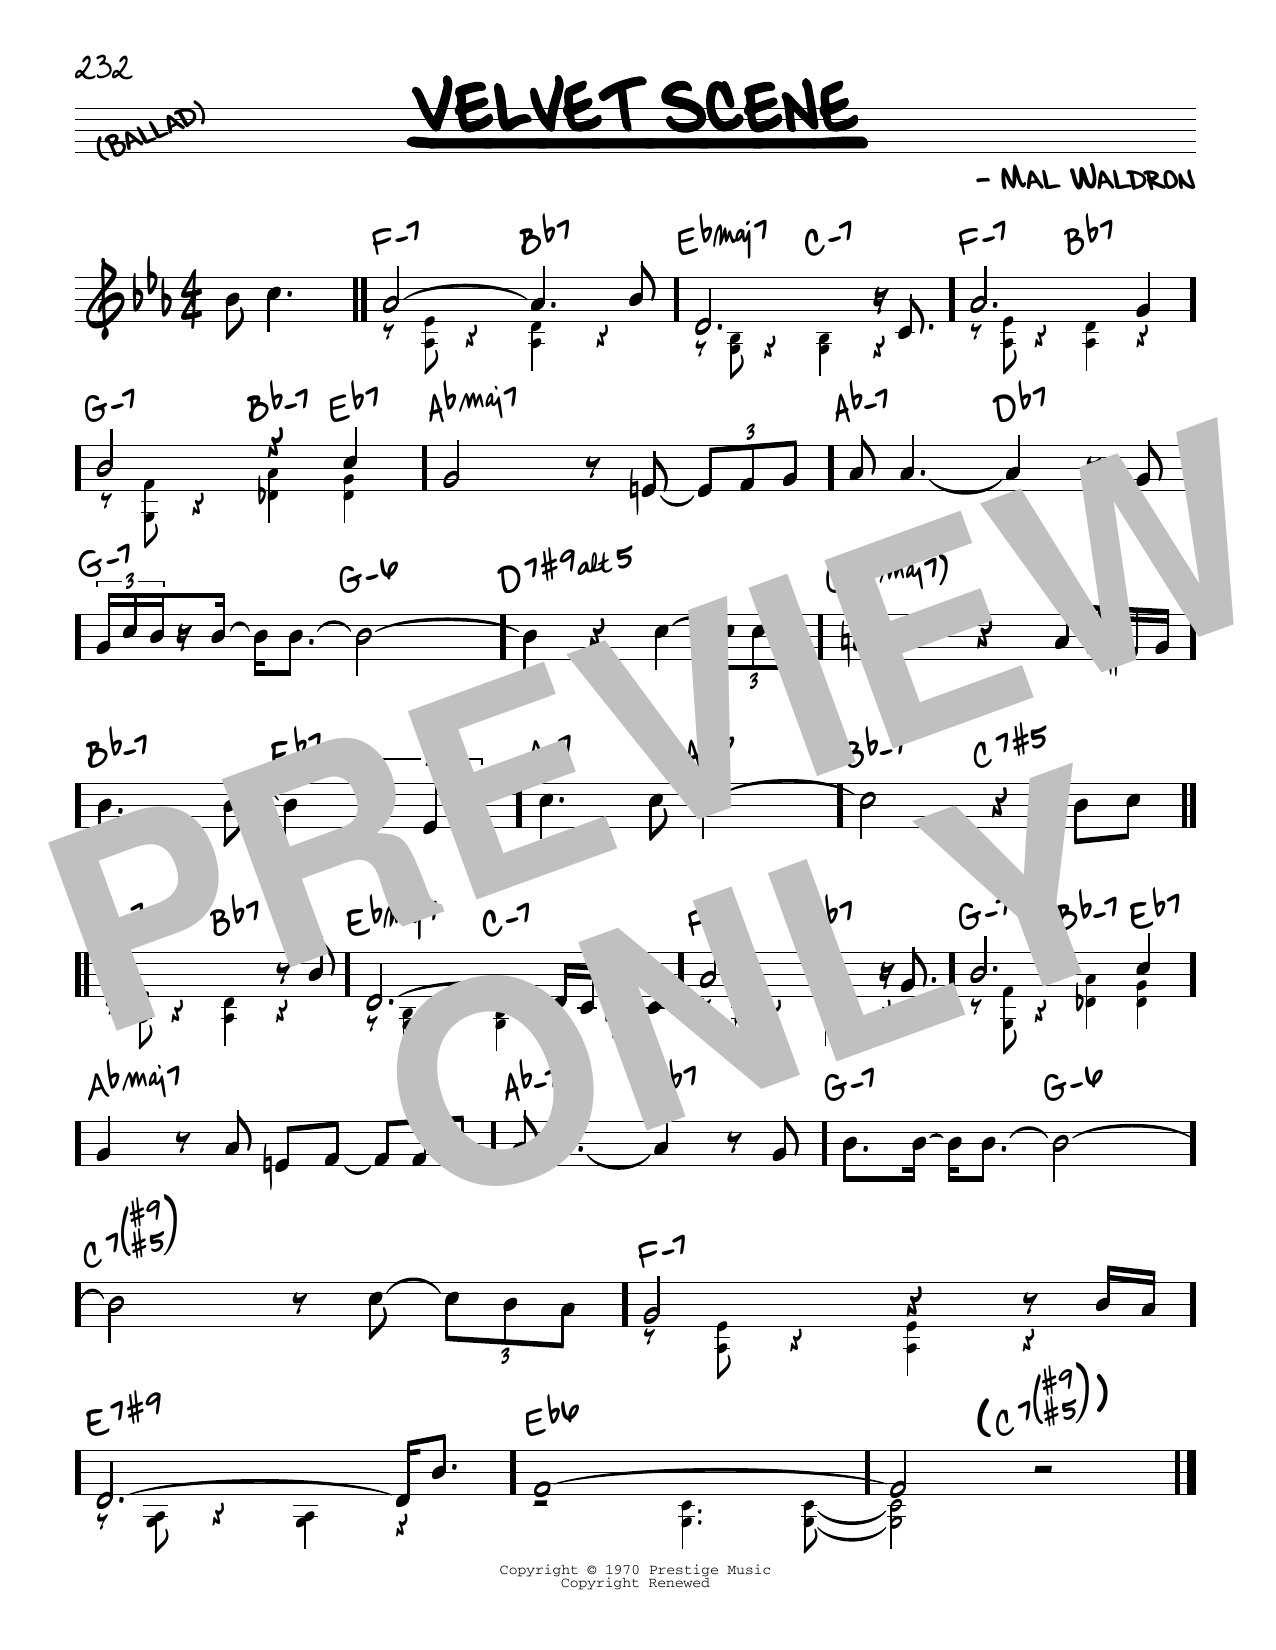 John Coltrane Velvet Scene Sheet Music Notes & Chords for Real Book – Melody & Chords - Download or Print PDF